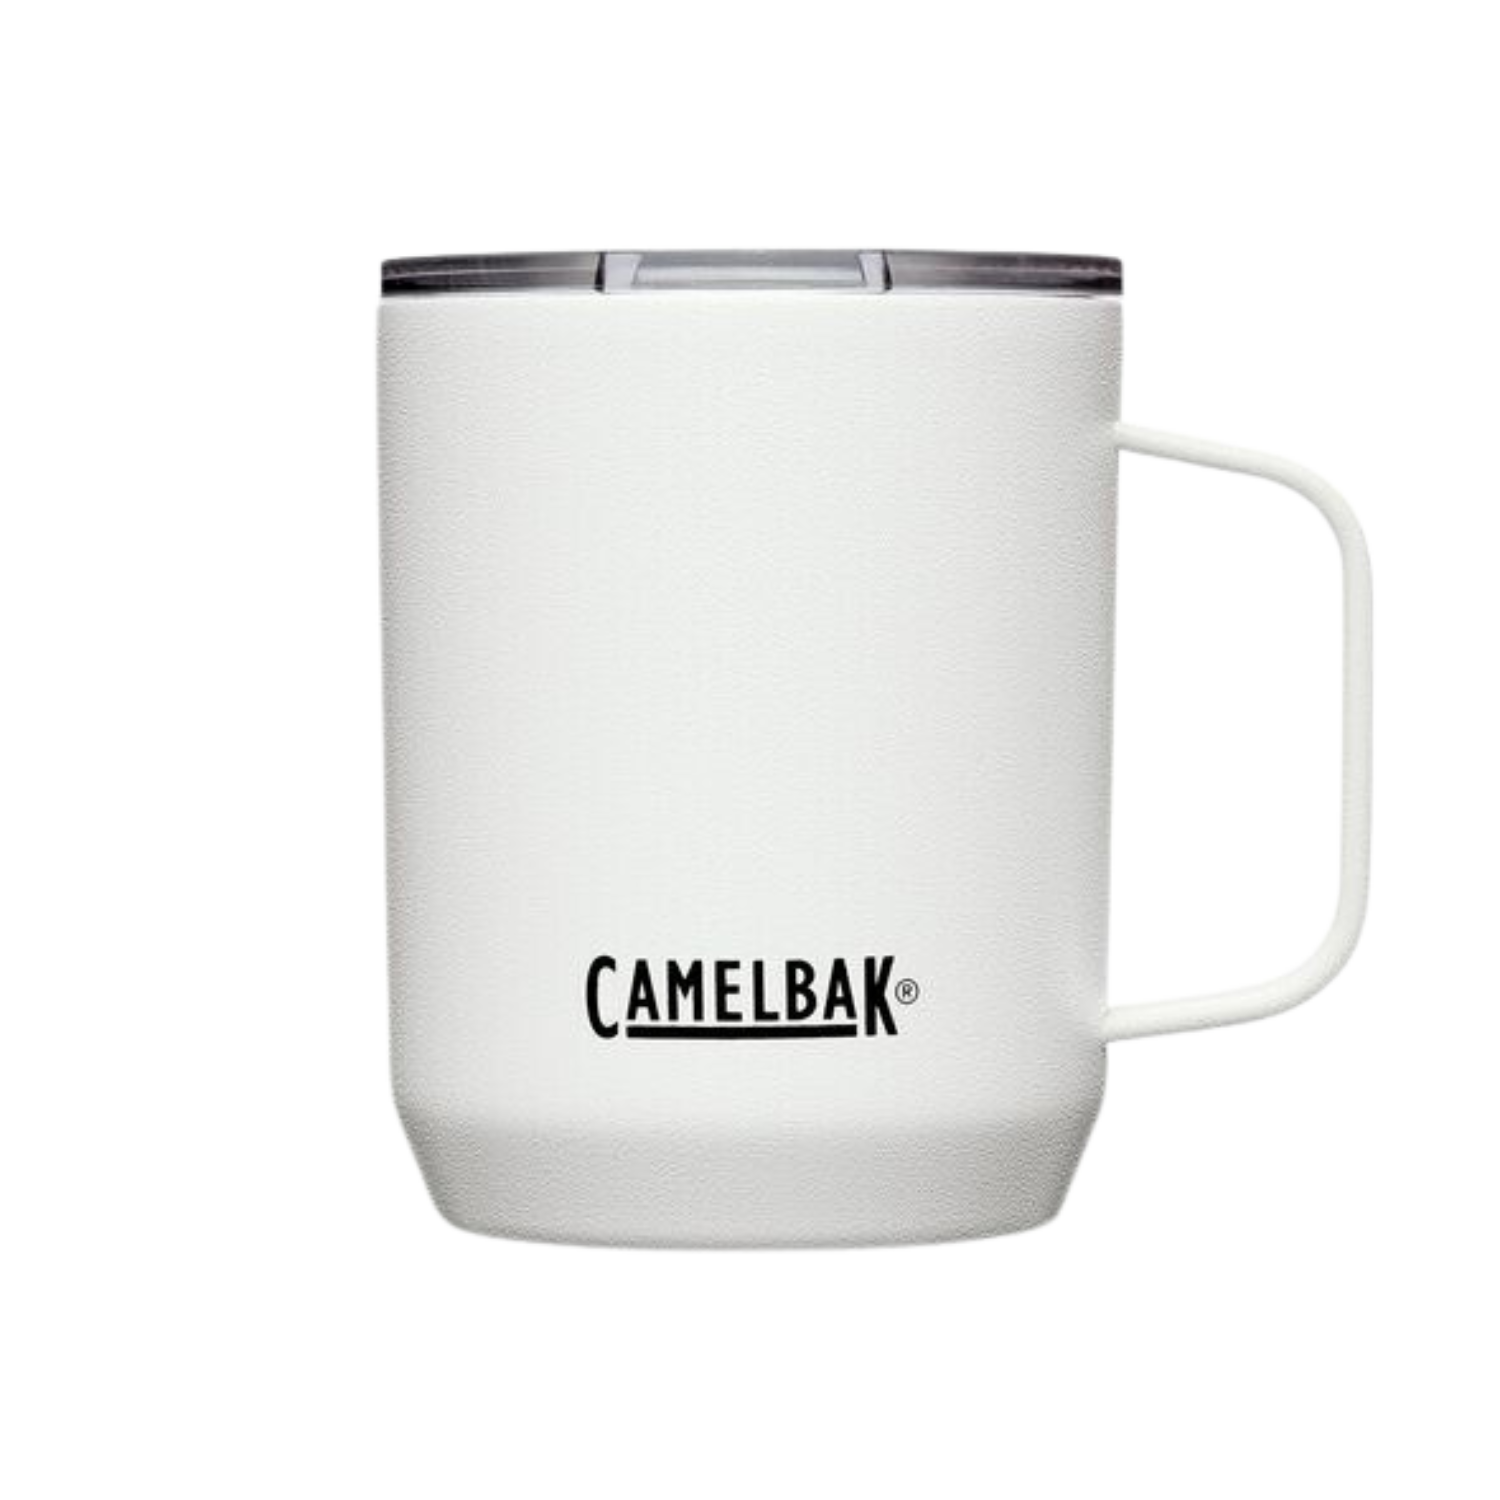 Camelbak Camp Mug 12oz Vacuum Insulated Stainless Steel